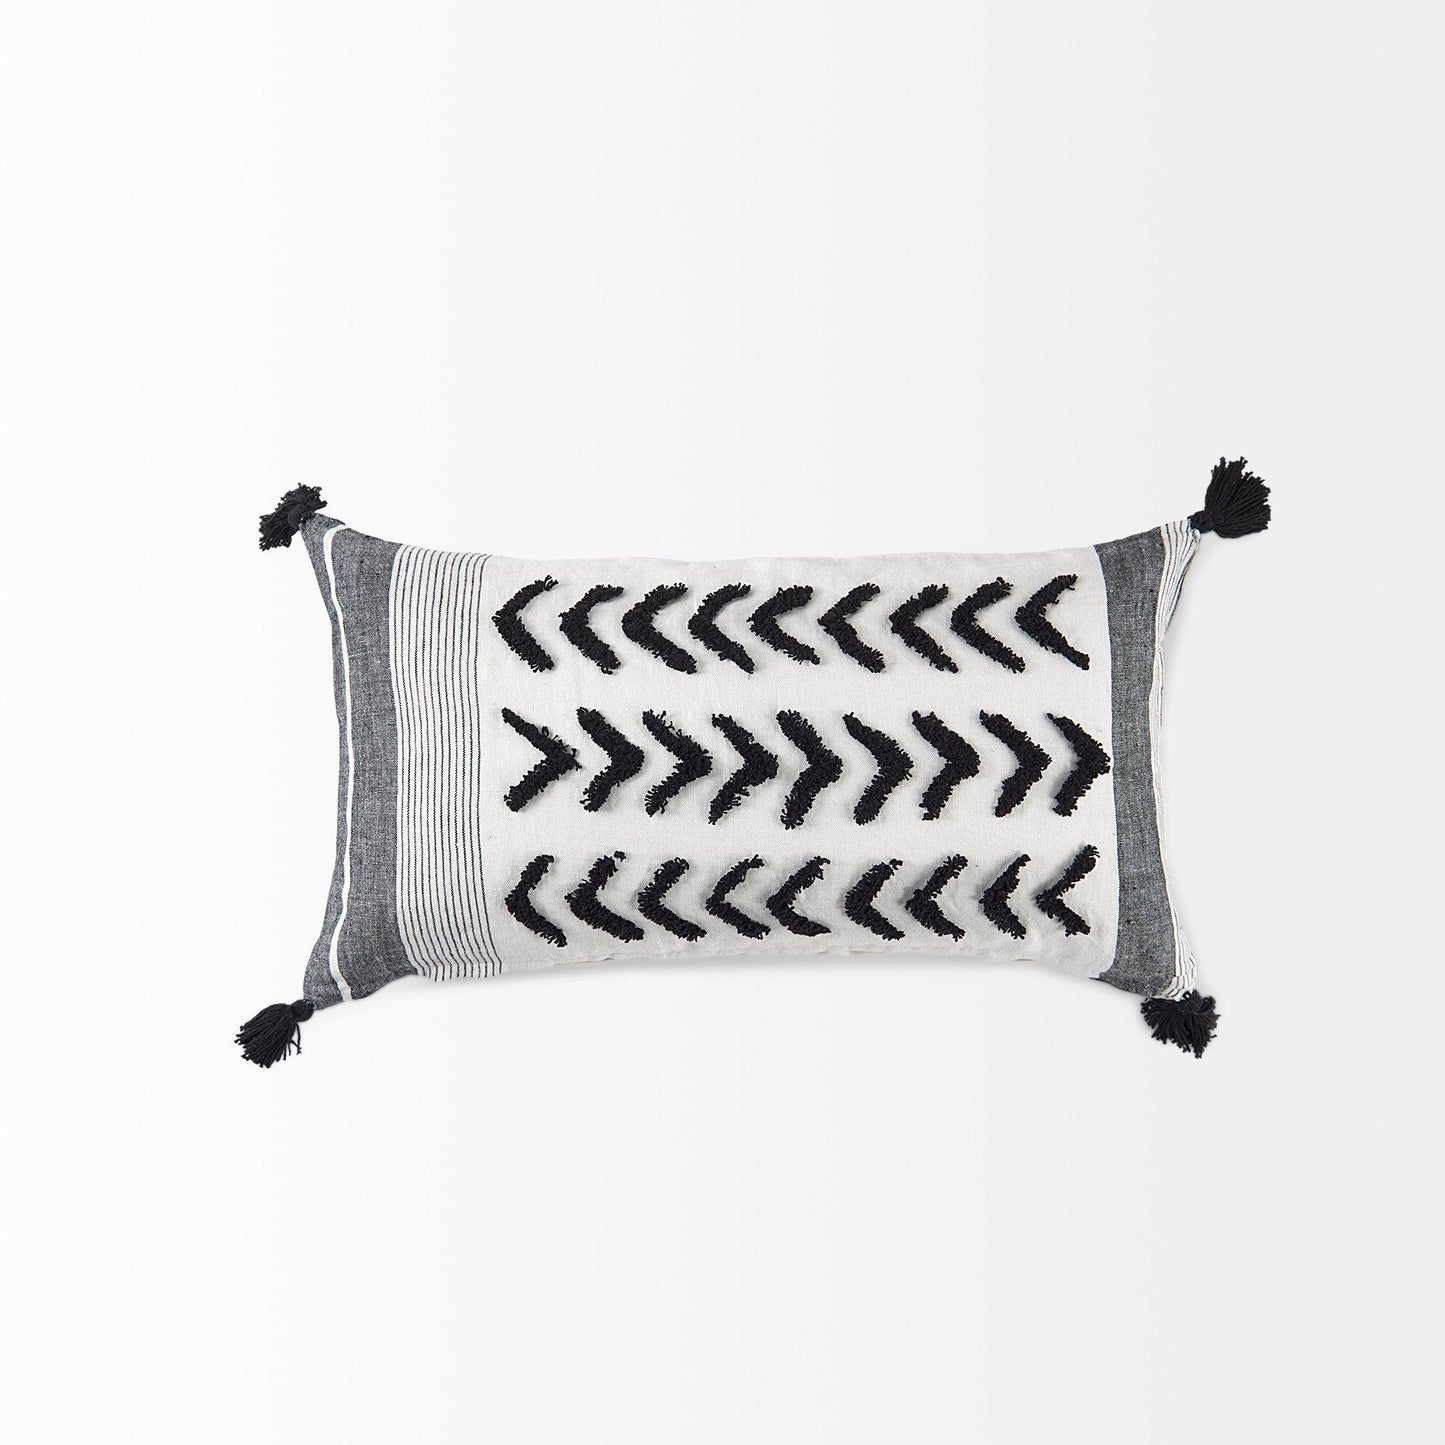 Kimia 14L x 26W White and Black Fabric Herringbone and Fringed Decorative Pillow Cover